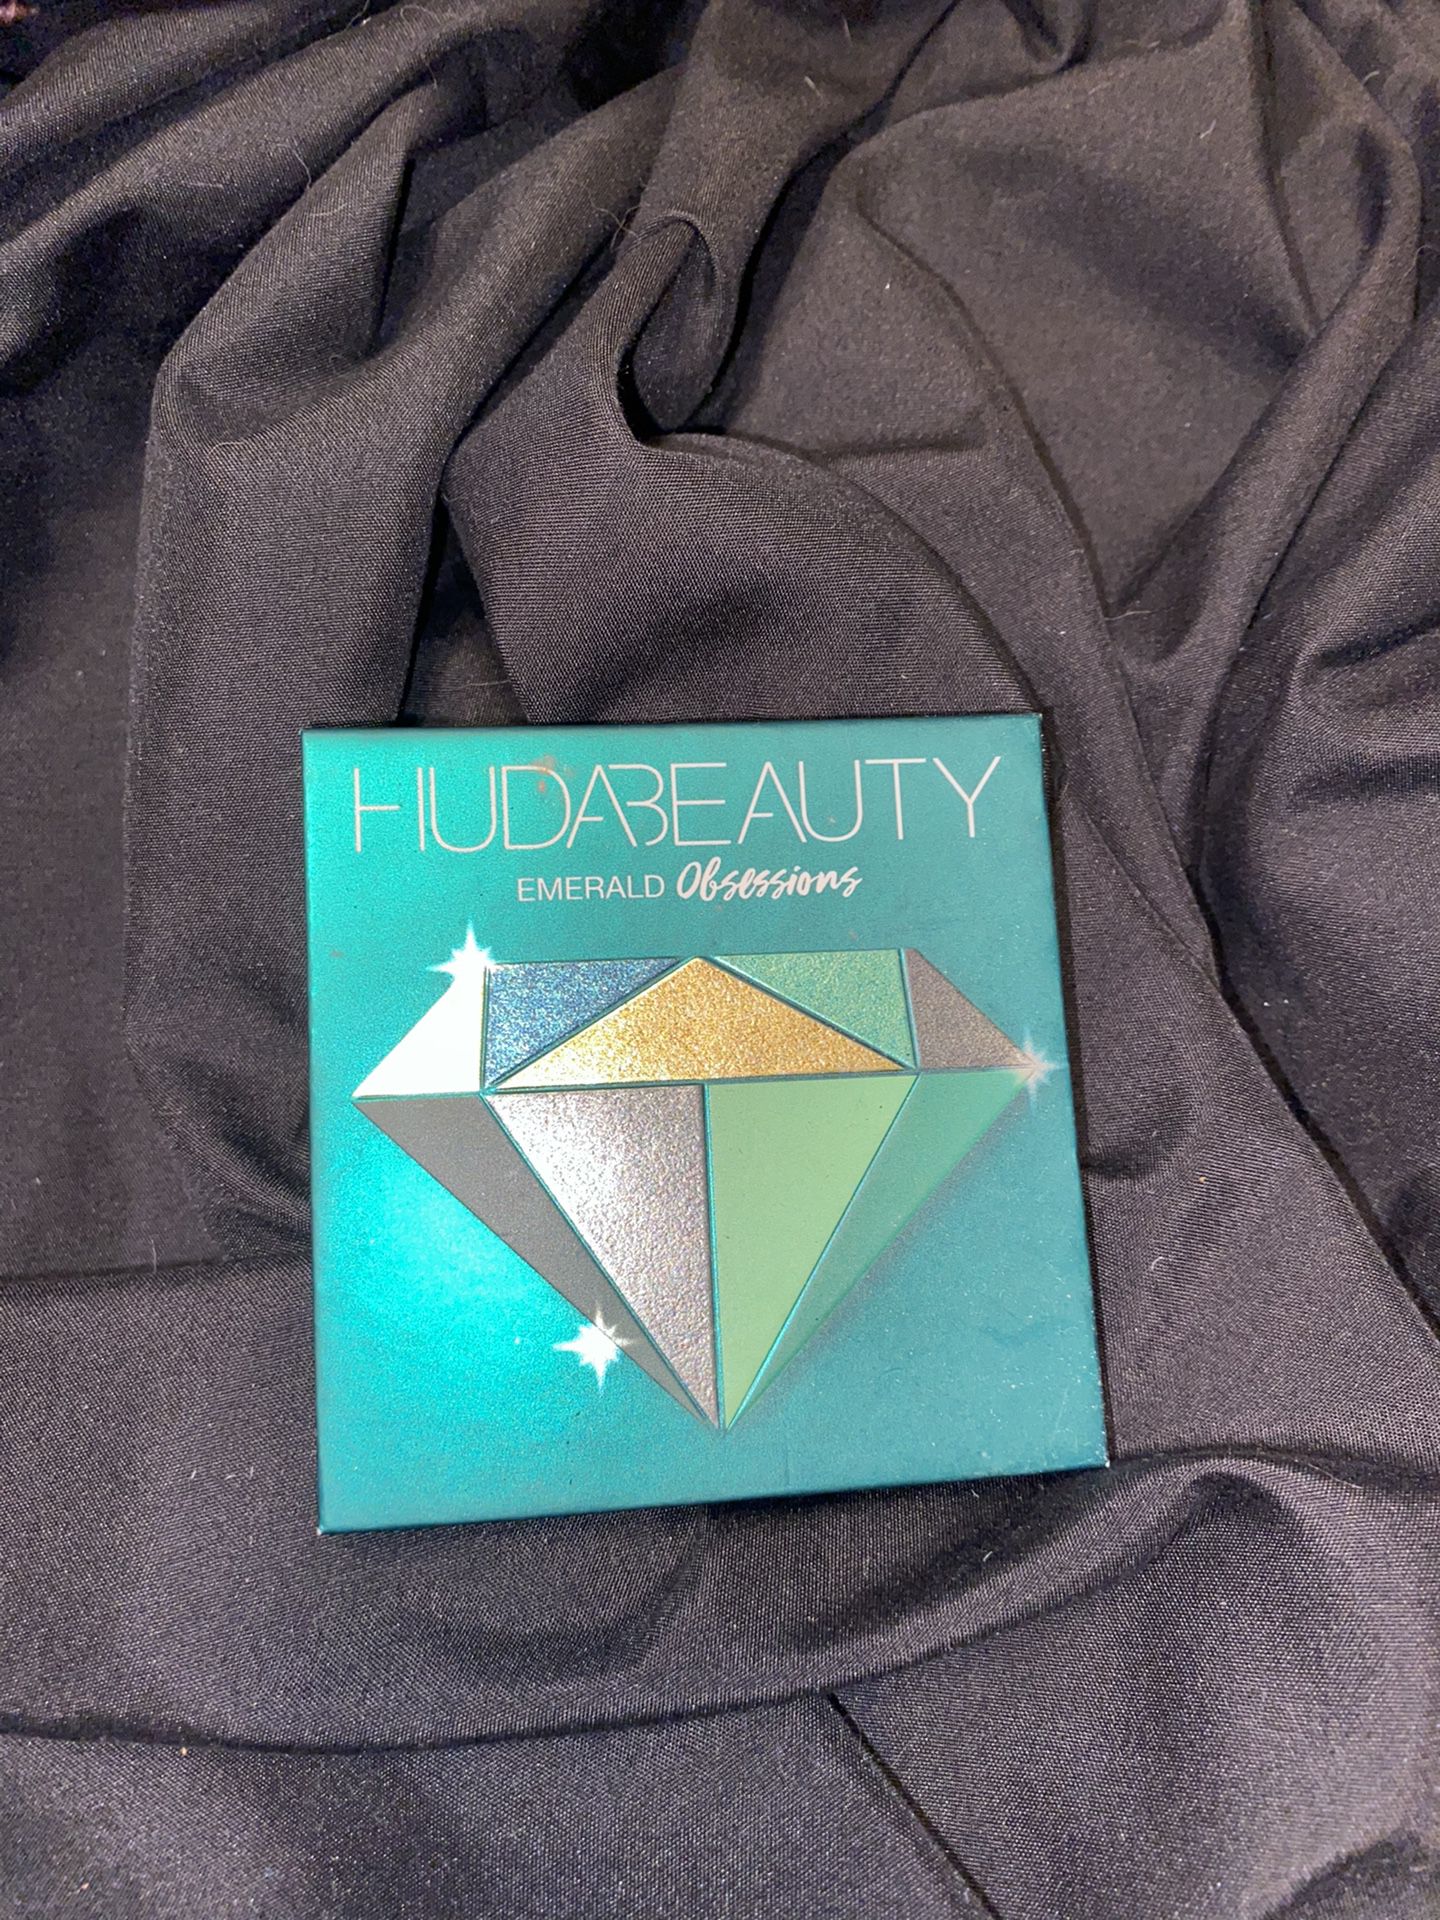 Huda Beauty Emerald Obsessions eyeshadow pallet